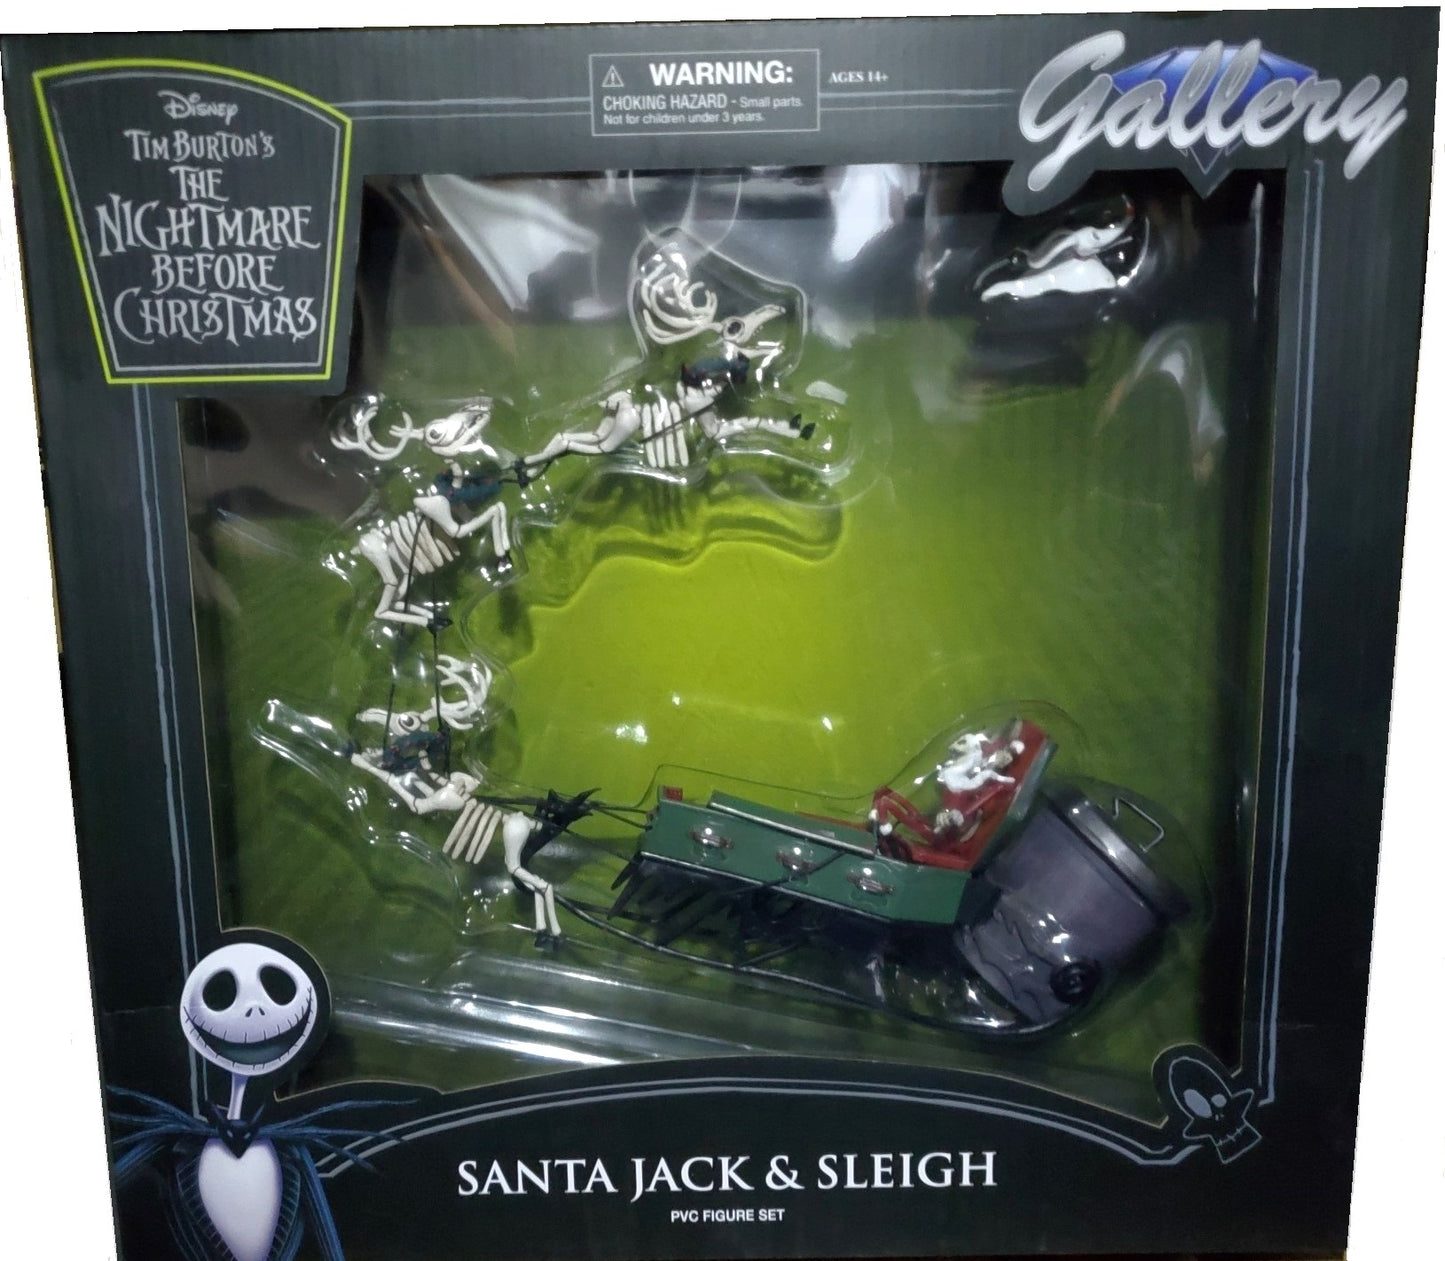 Nightmare before Christmas Santa Jack and Sleigh PVC figure set 